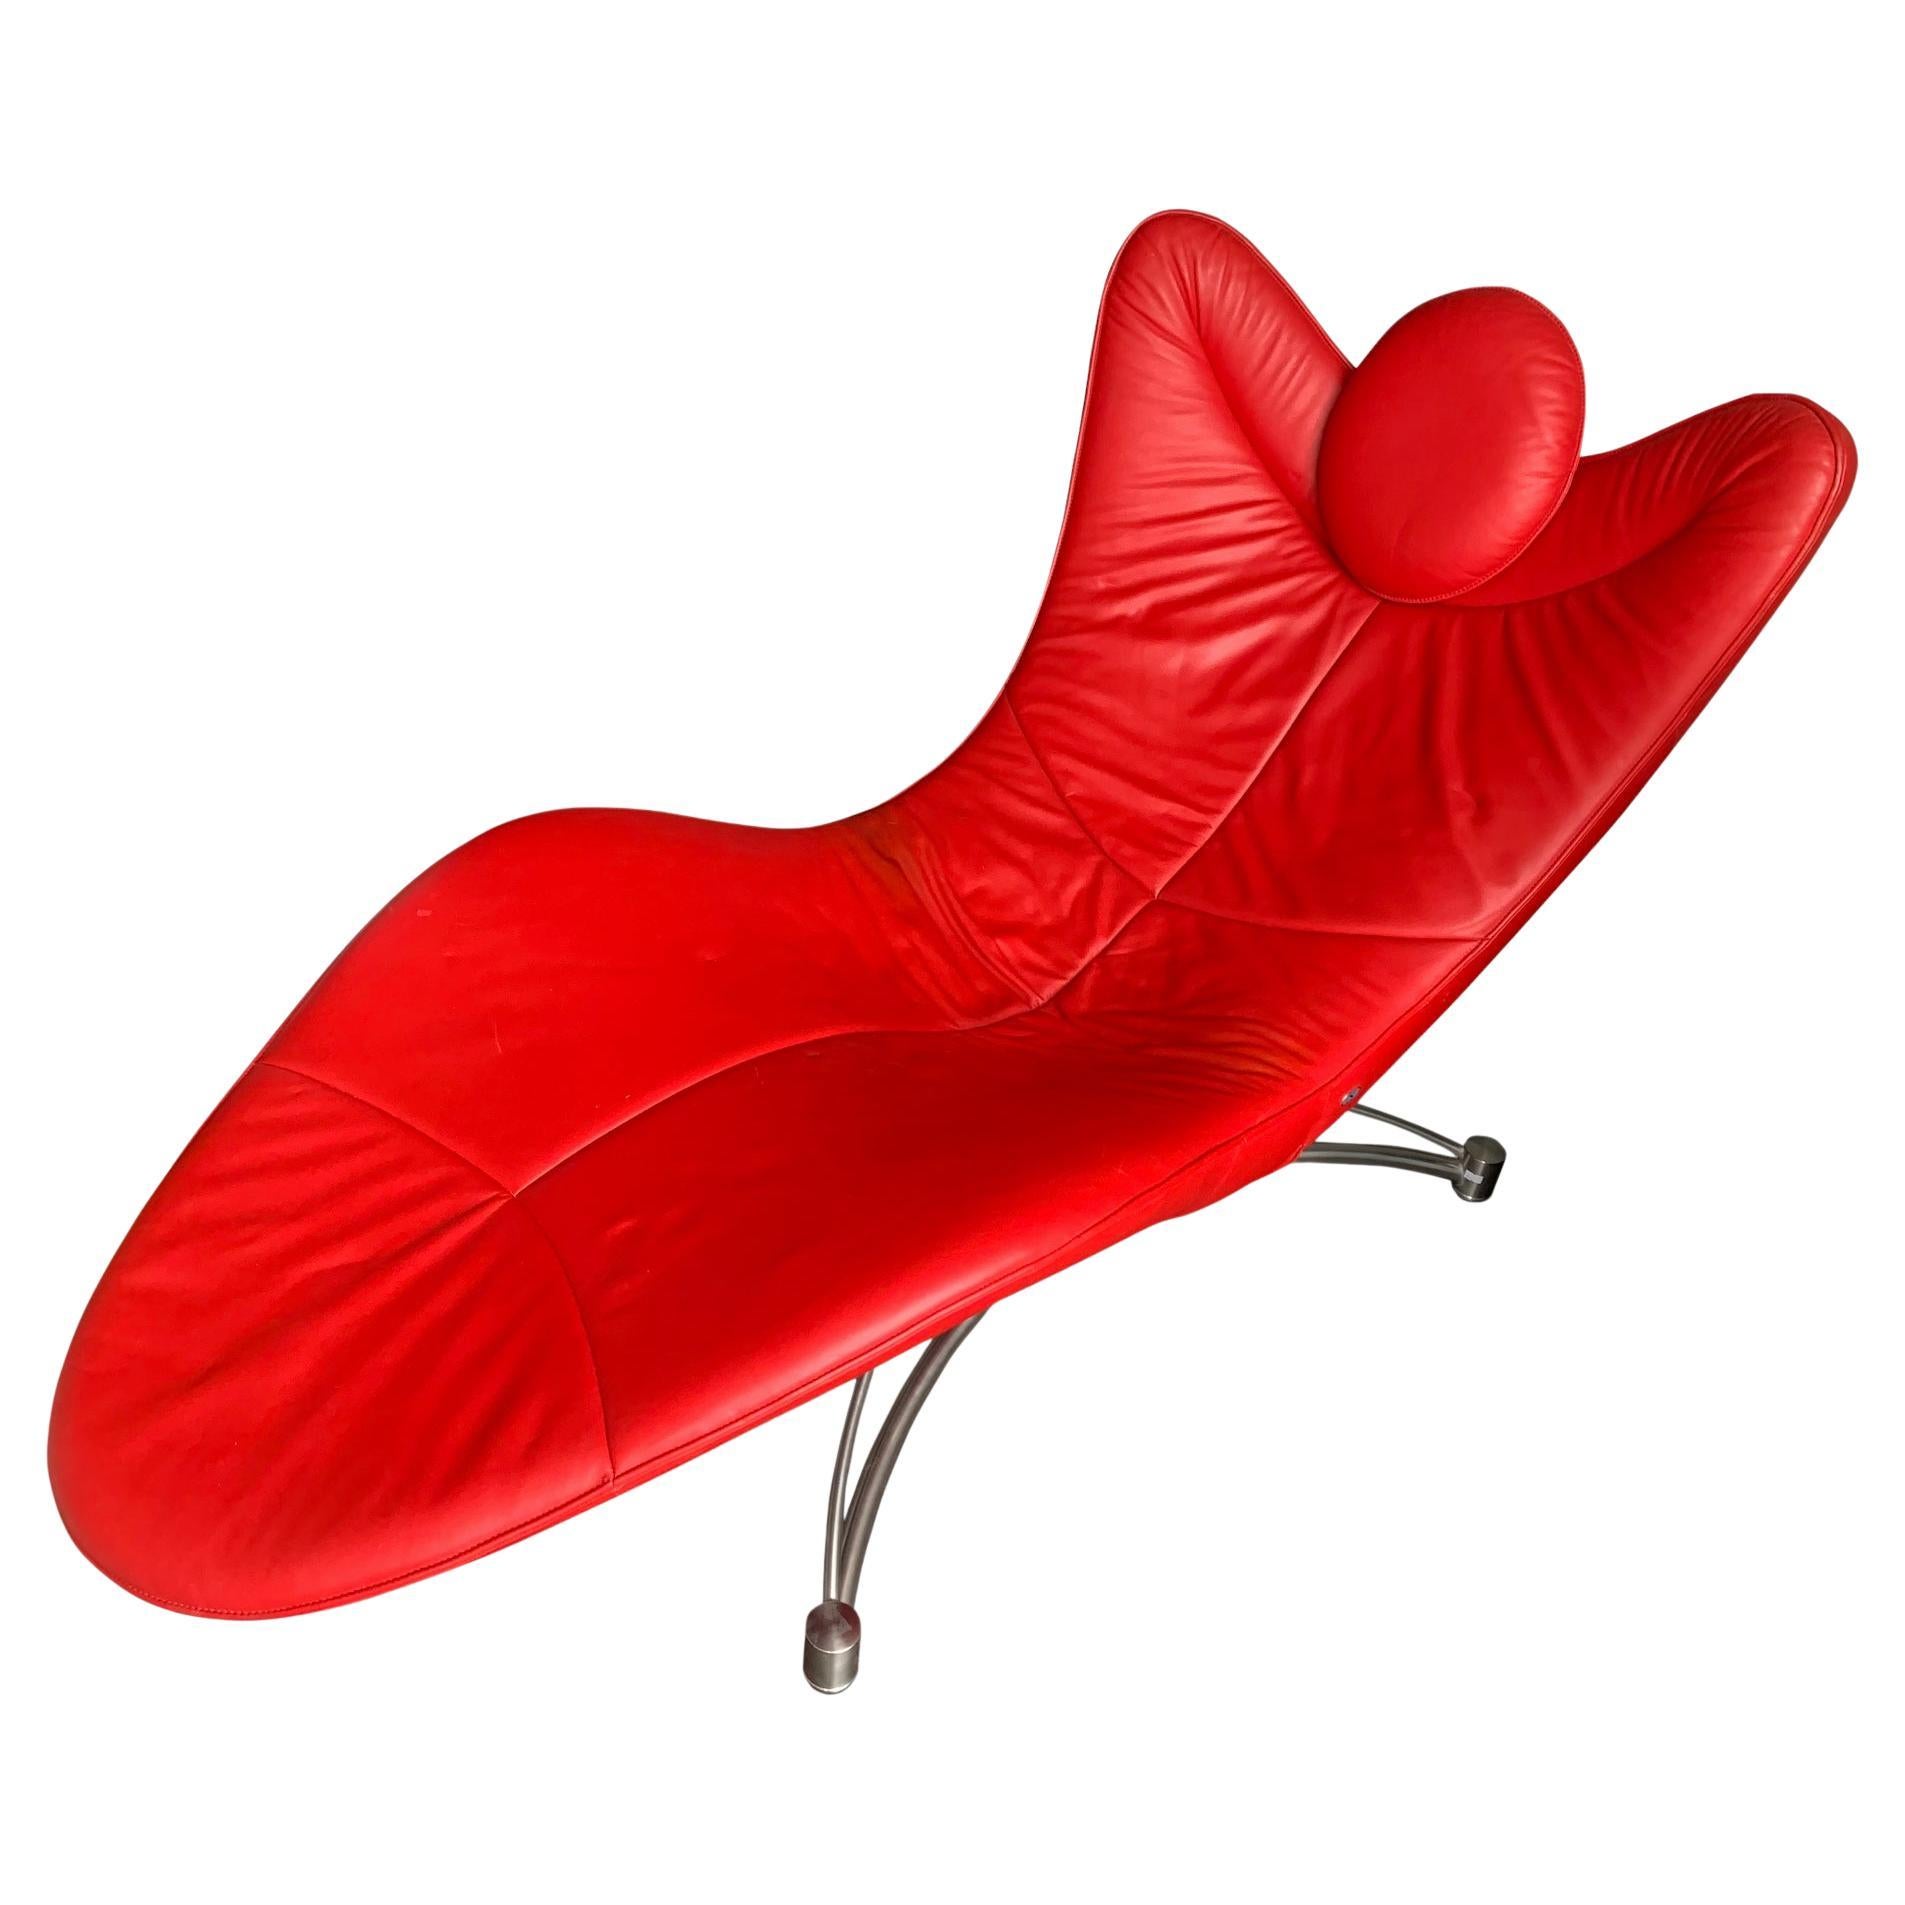 De Sede Ds 151 Red Leather & Steel Jane Worthington Designer Chaise Lounge 